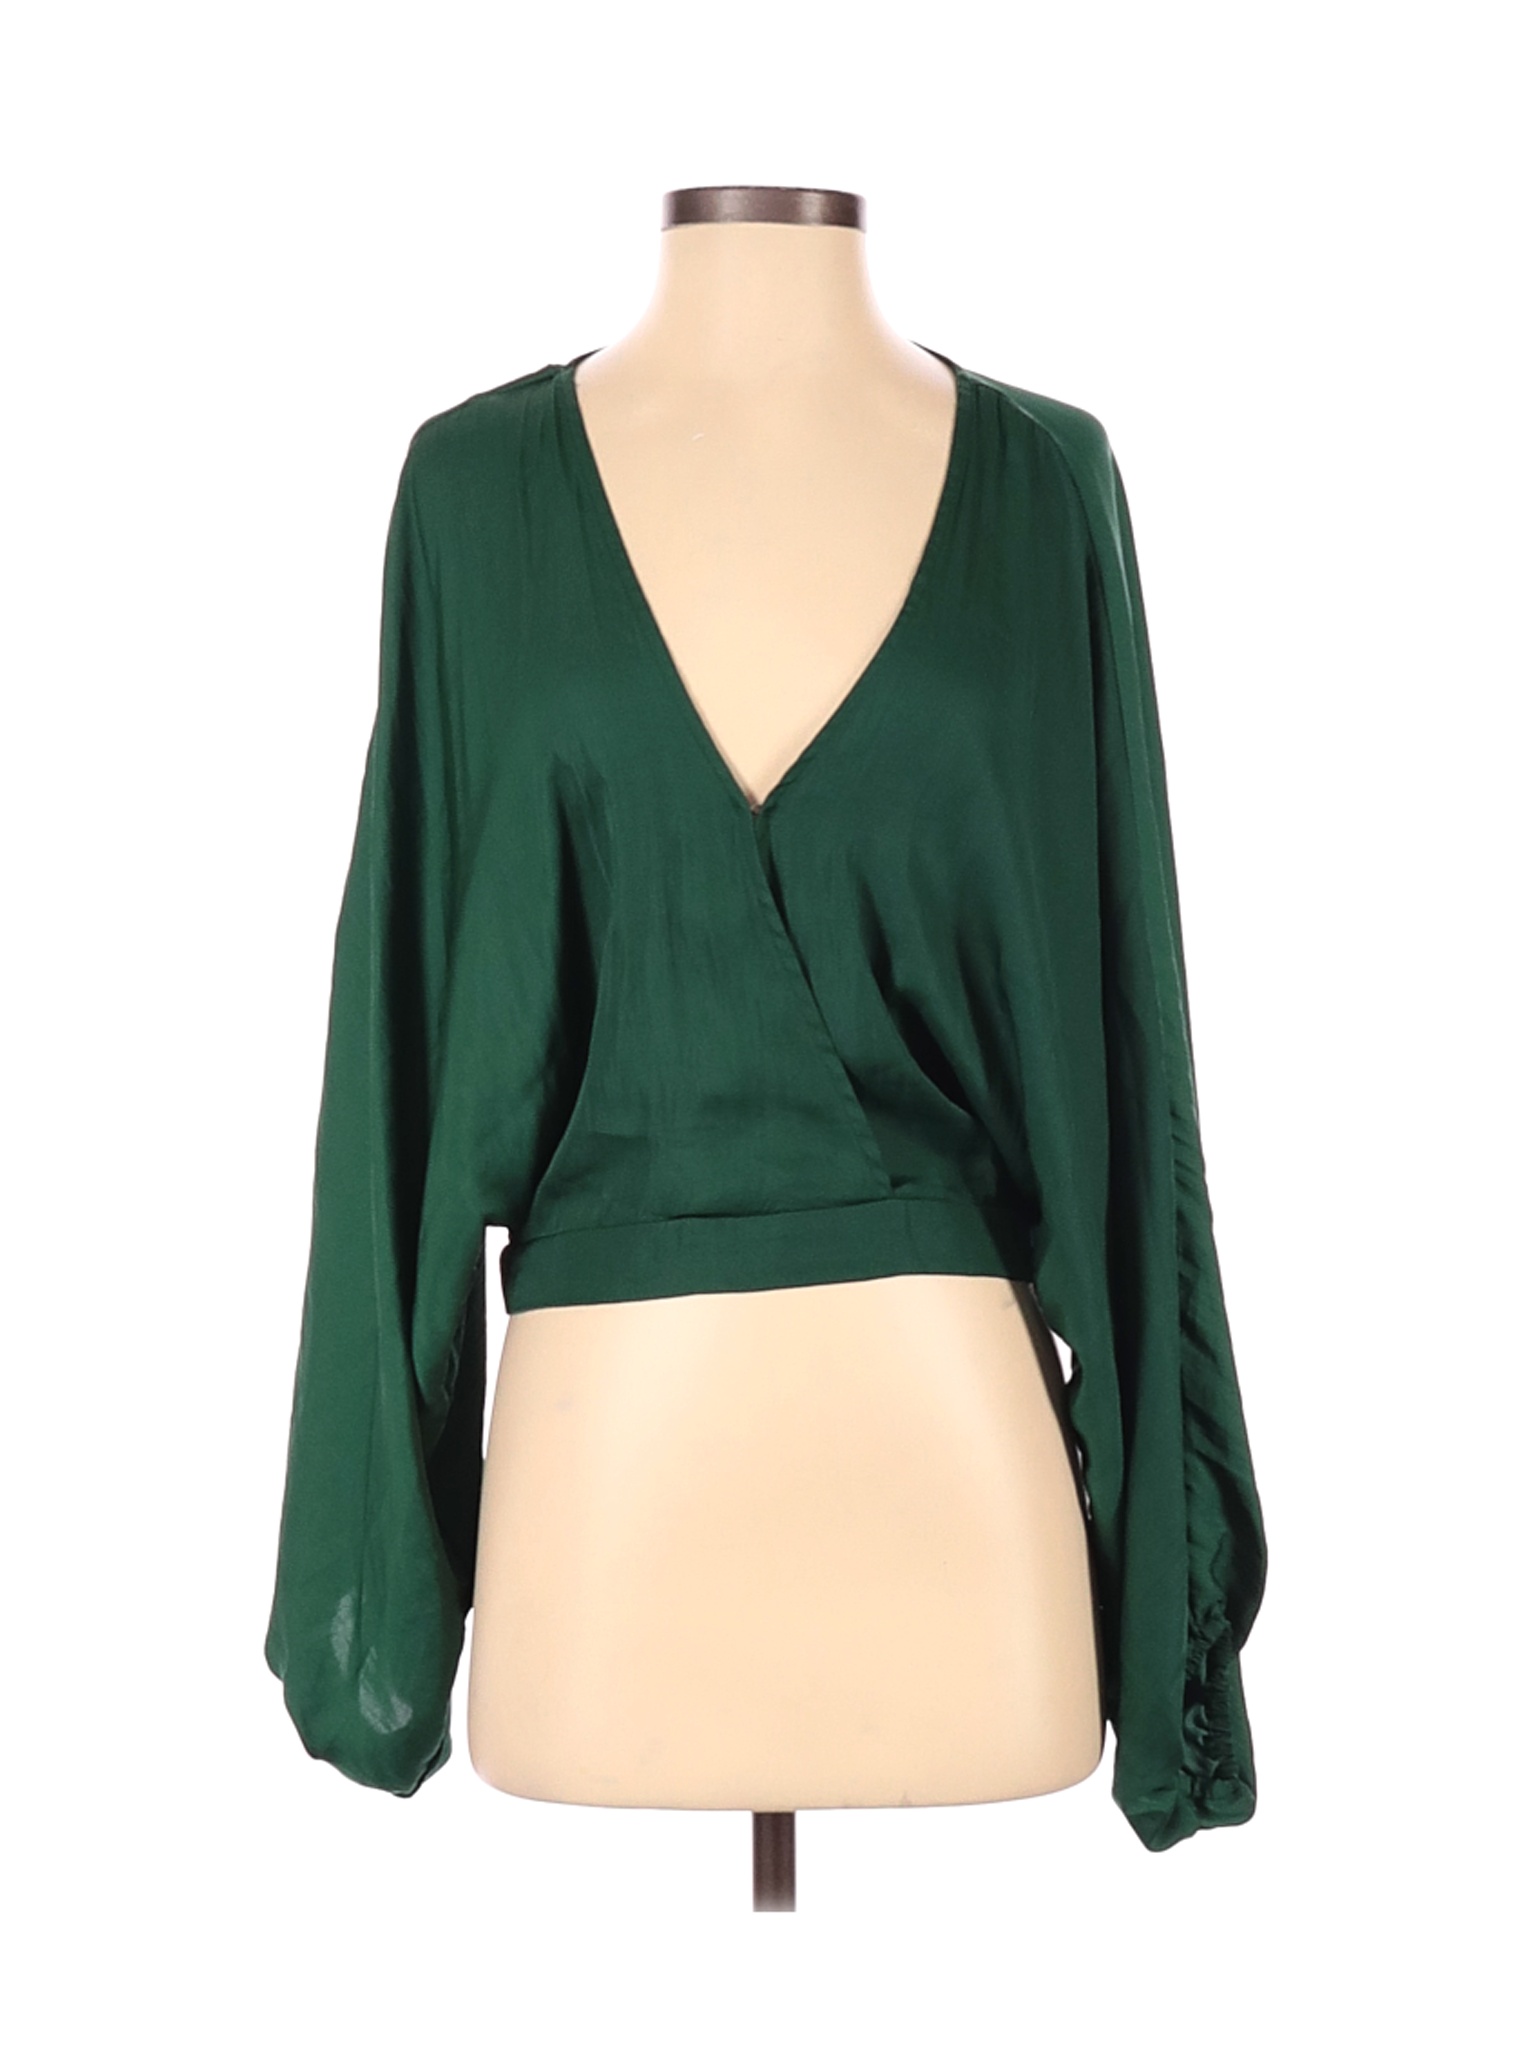 Mable Women Green Long Sleeve Blouse S | eBay